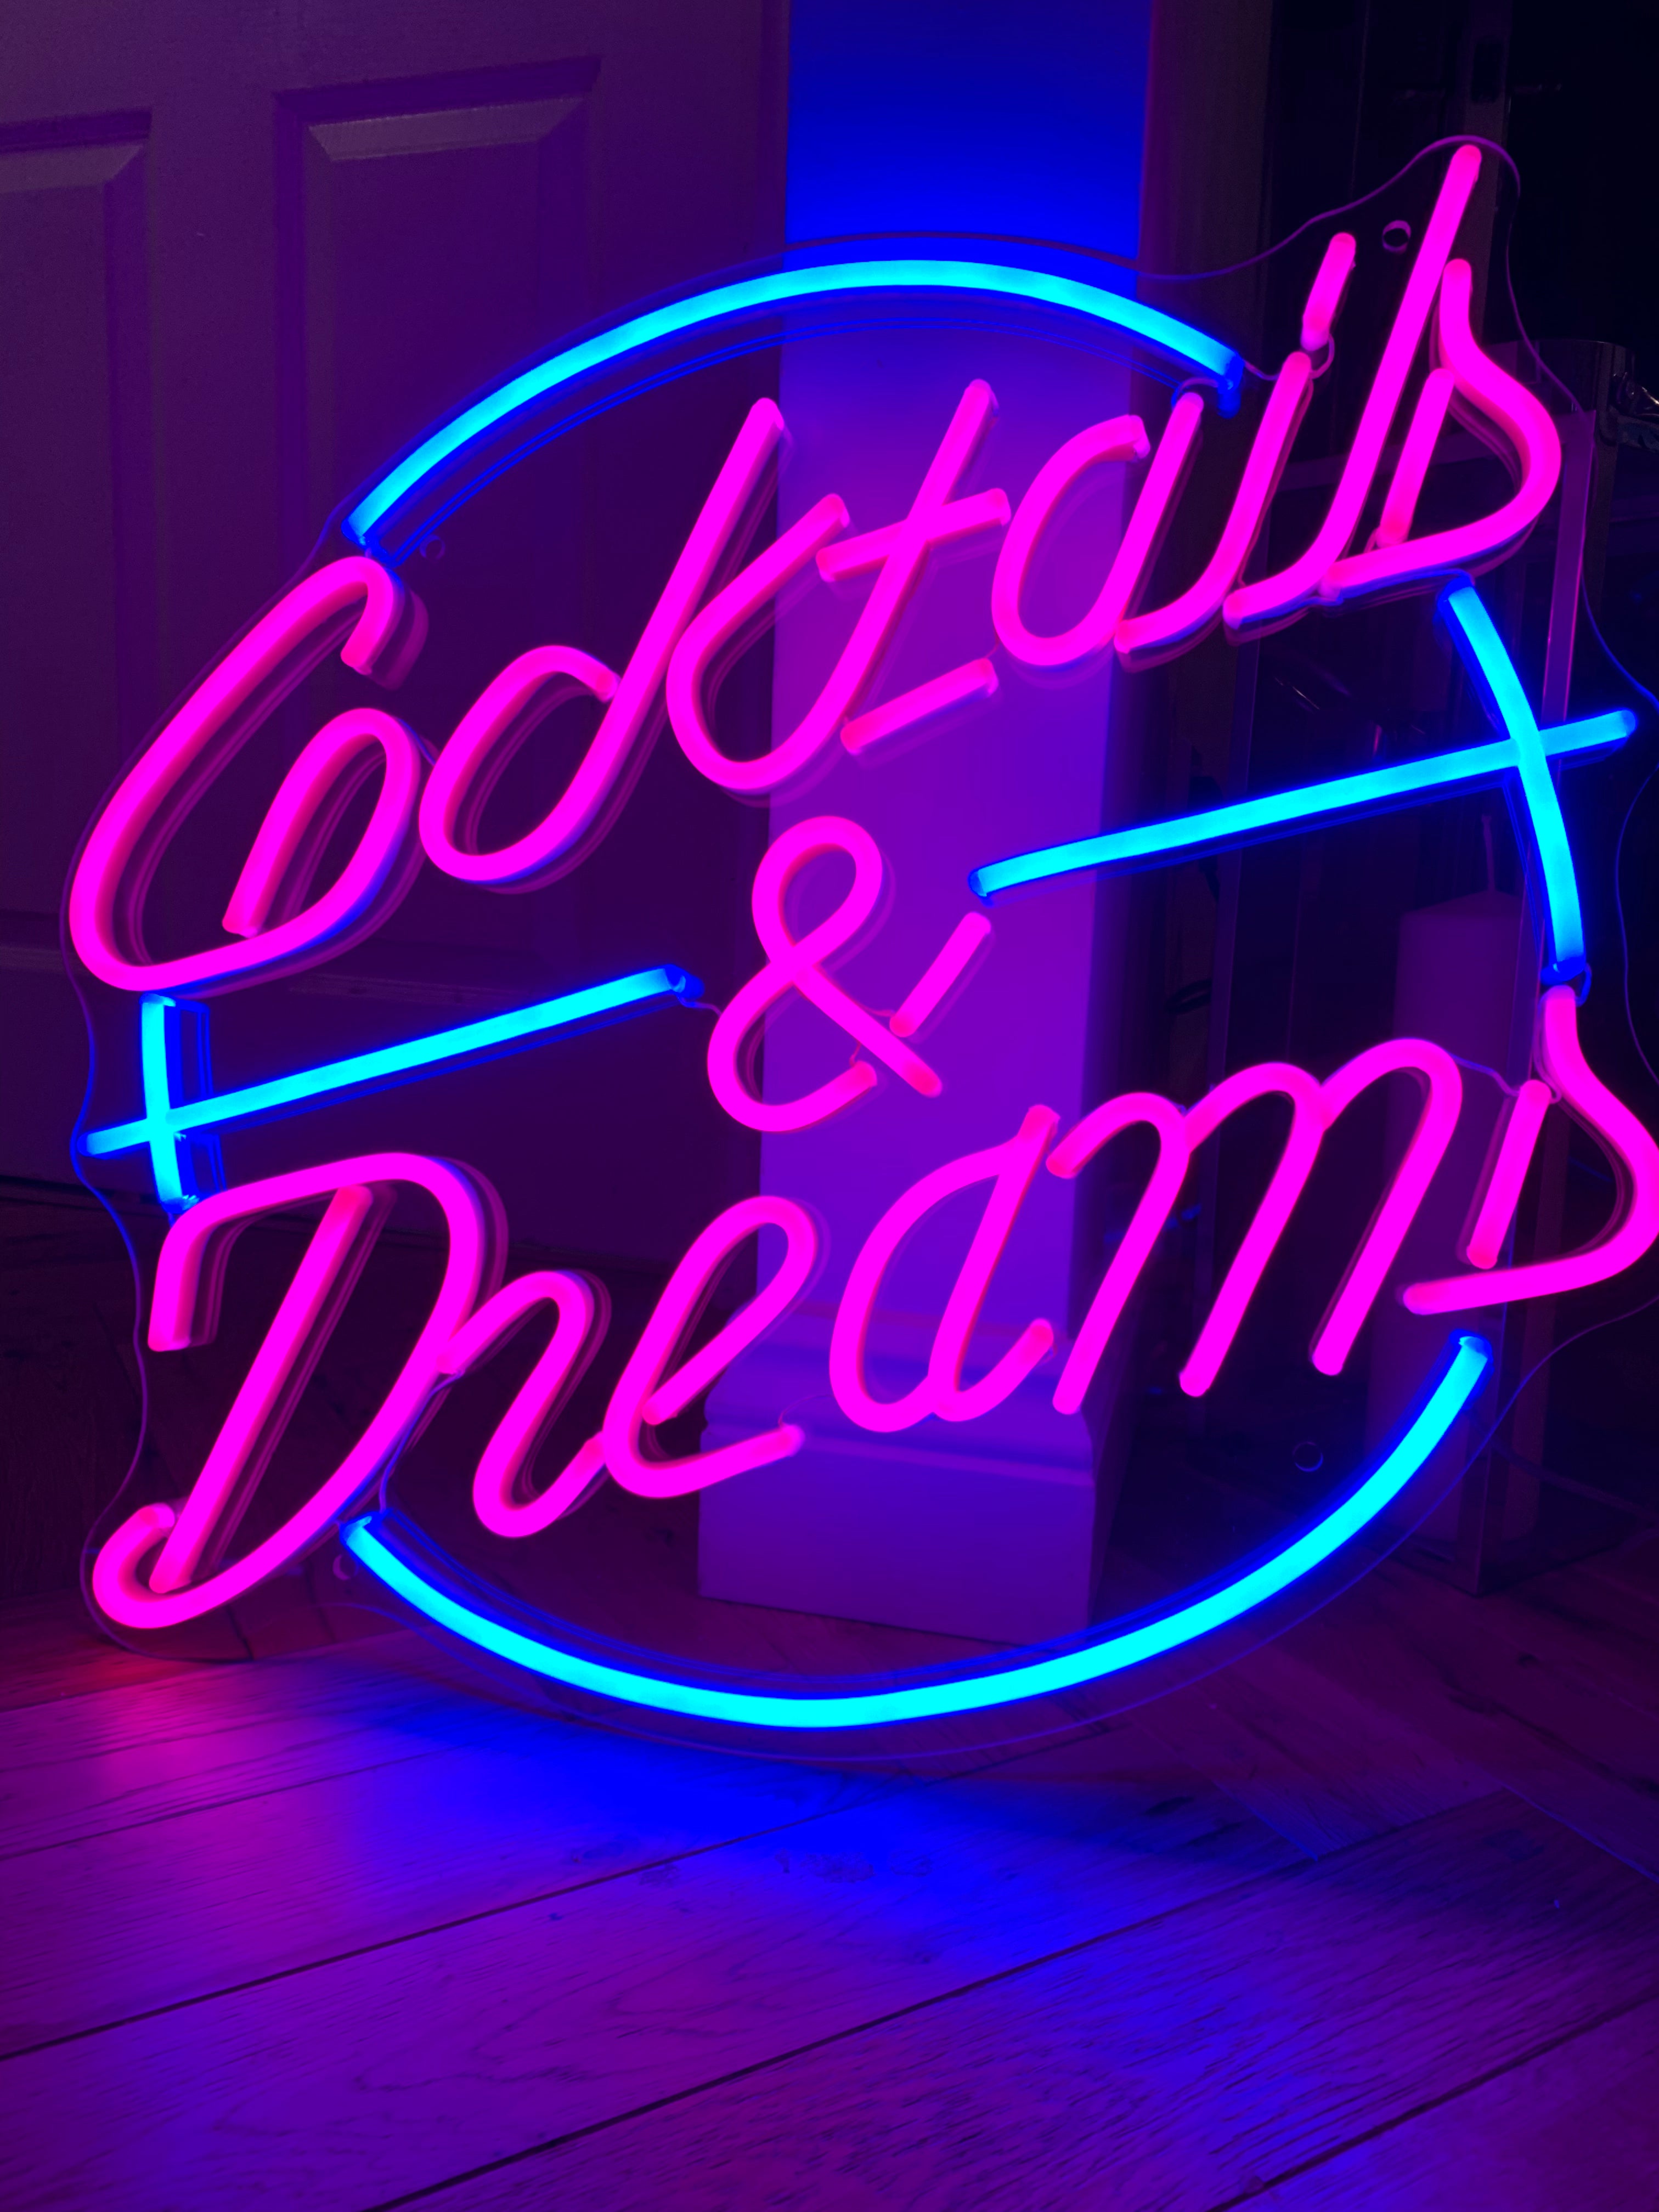 Cocktails & Dreams ' LED Neon sign